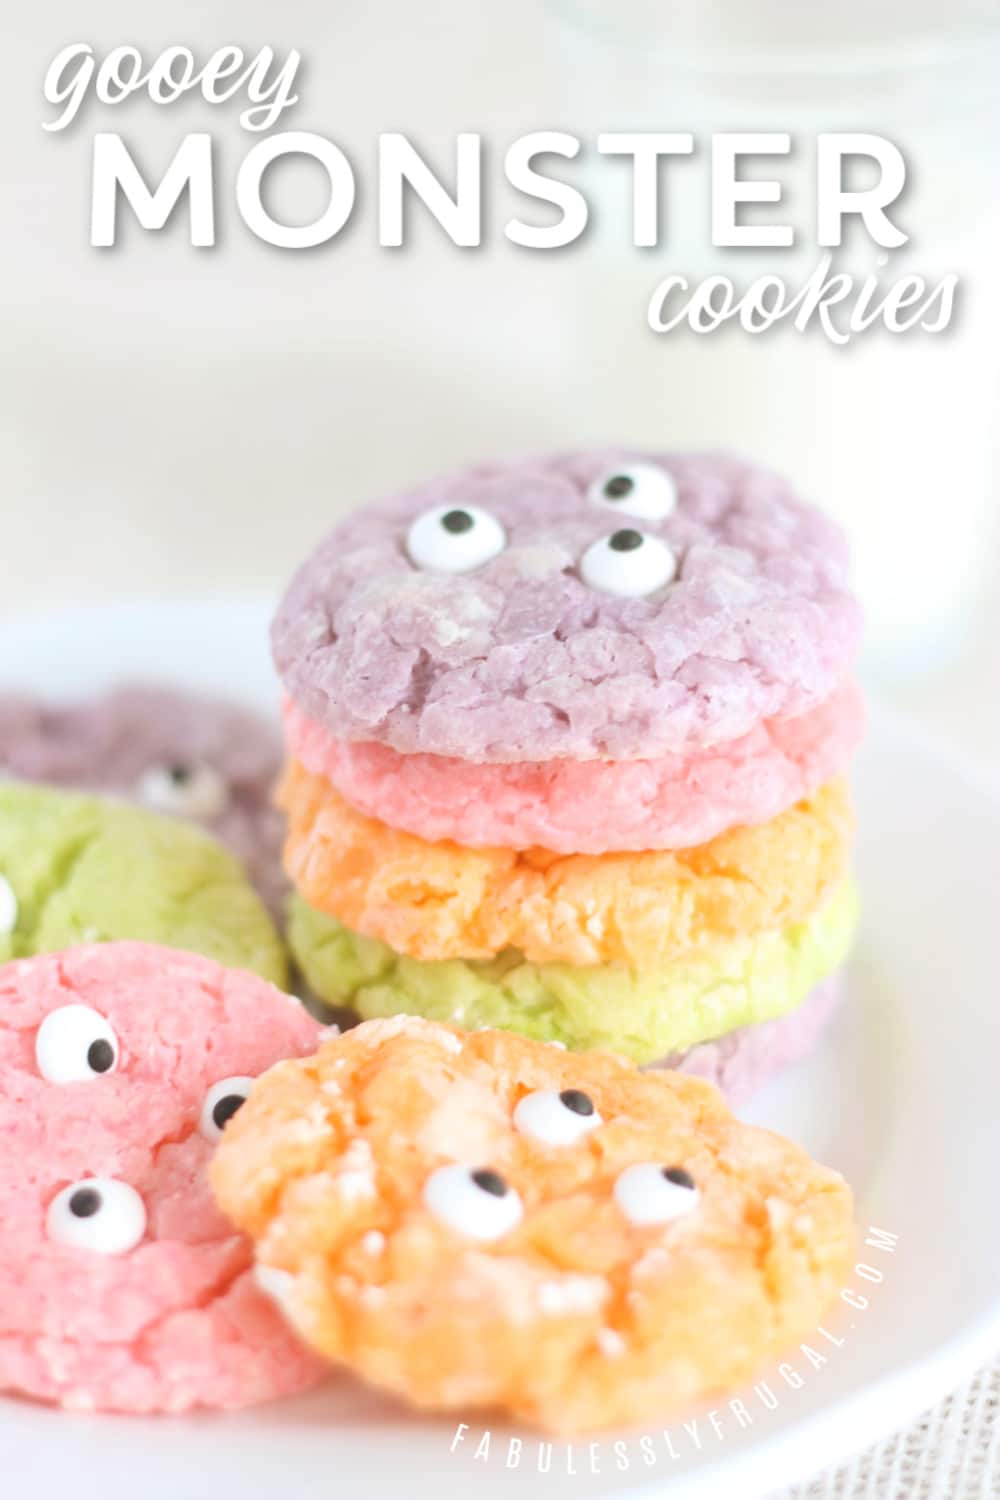 Gooey monster cookies with eyes